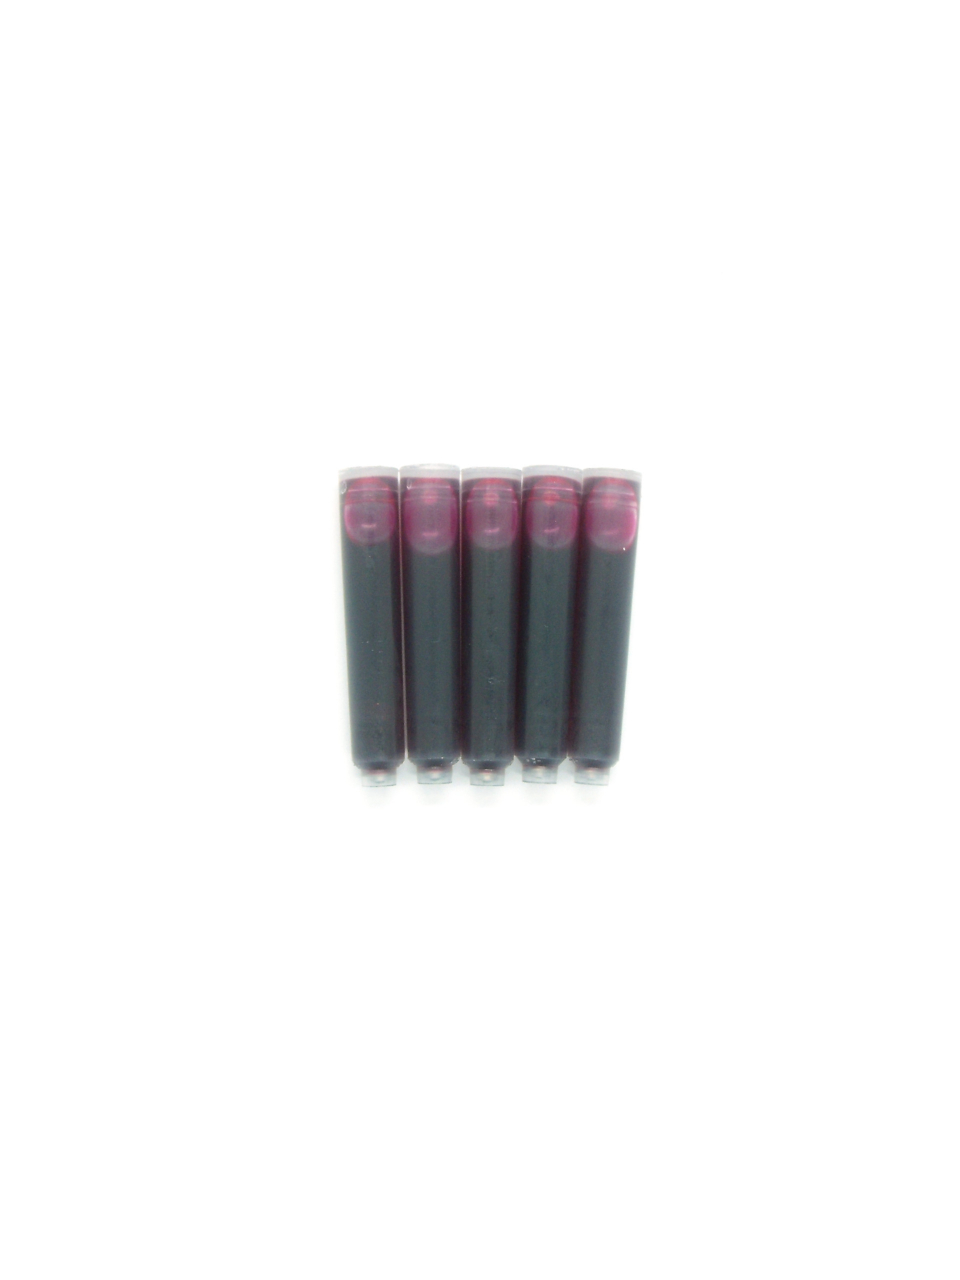 PenConverter Ink Cartridges For Omas Fountain Pens (Pink)